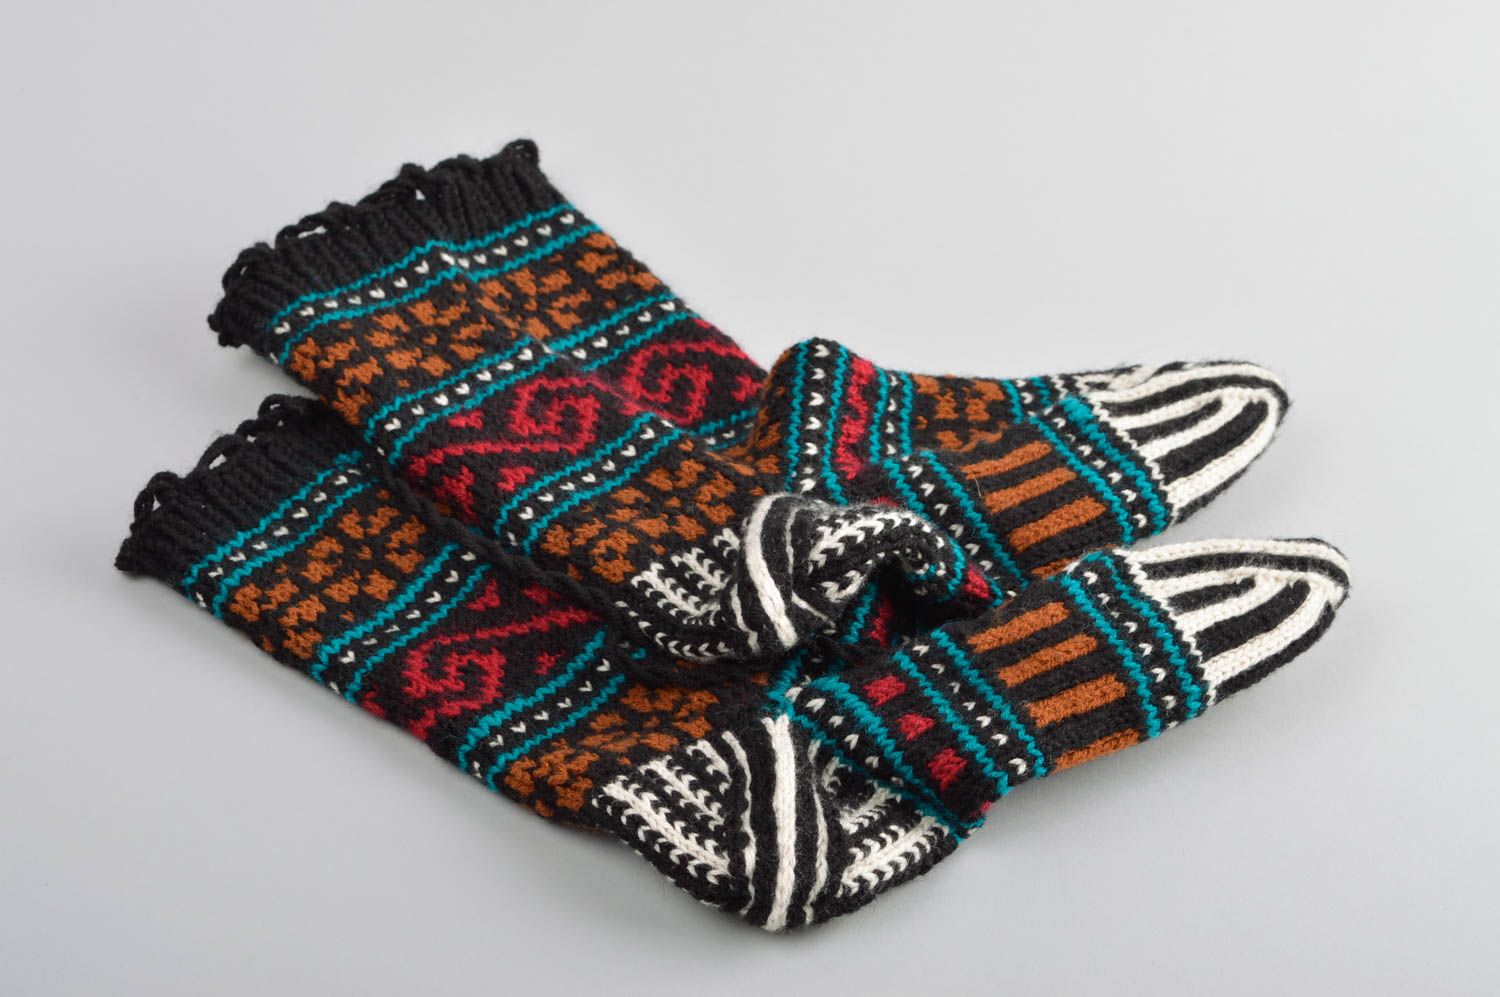 Hand-knitted socks woolen socks warm winter socks winter accessories woman socks photo 5